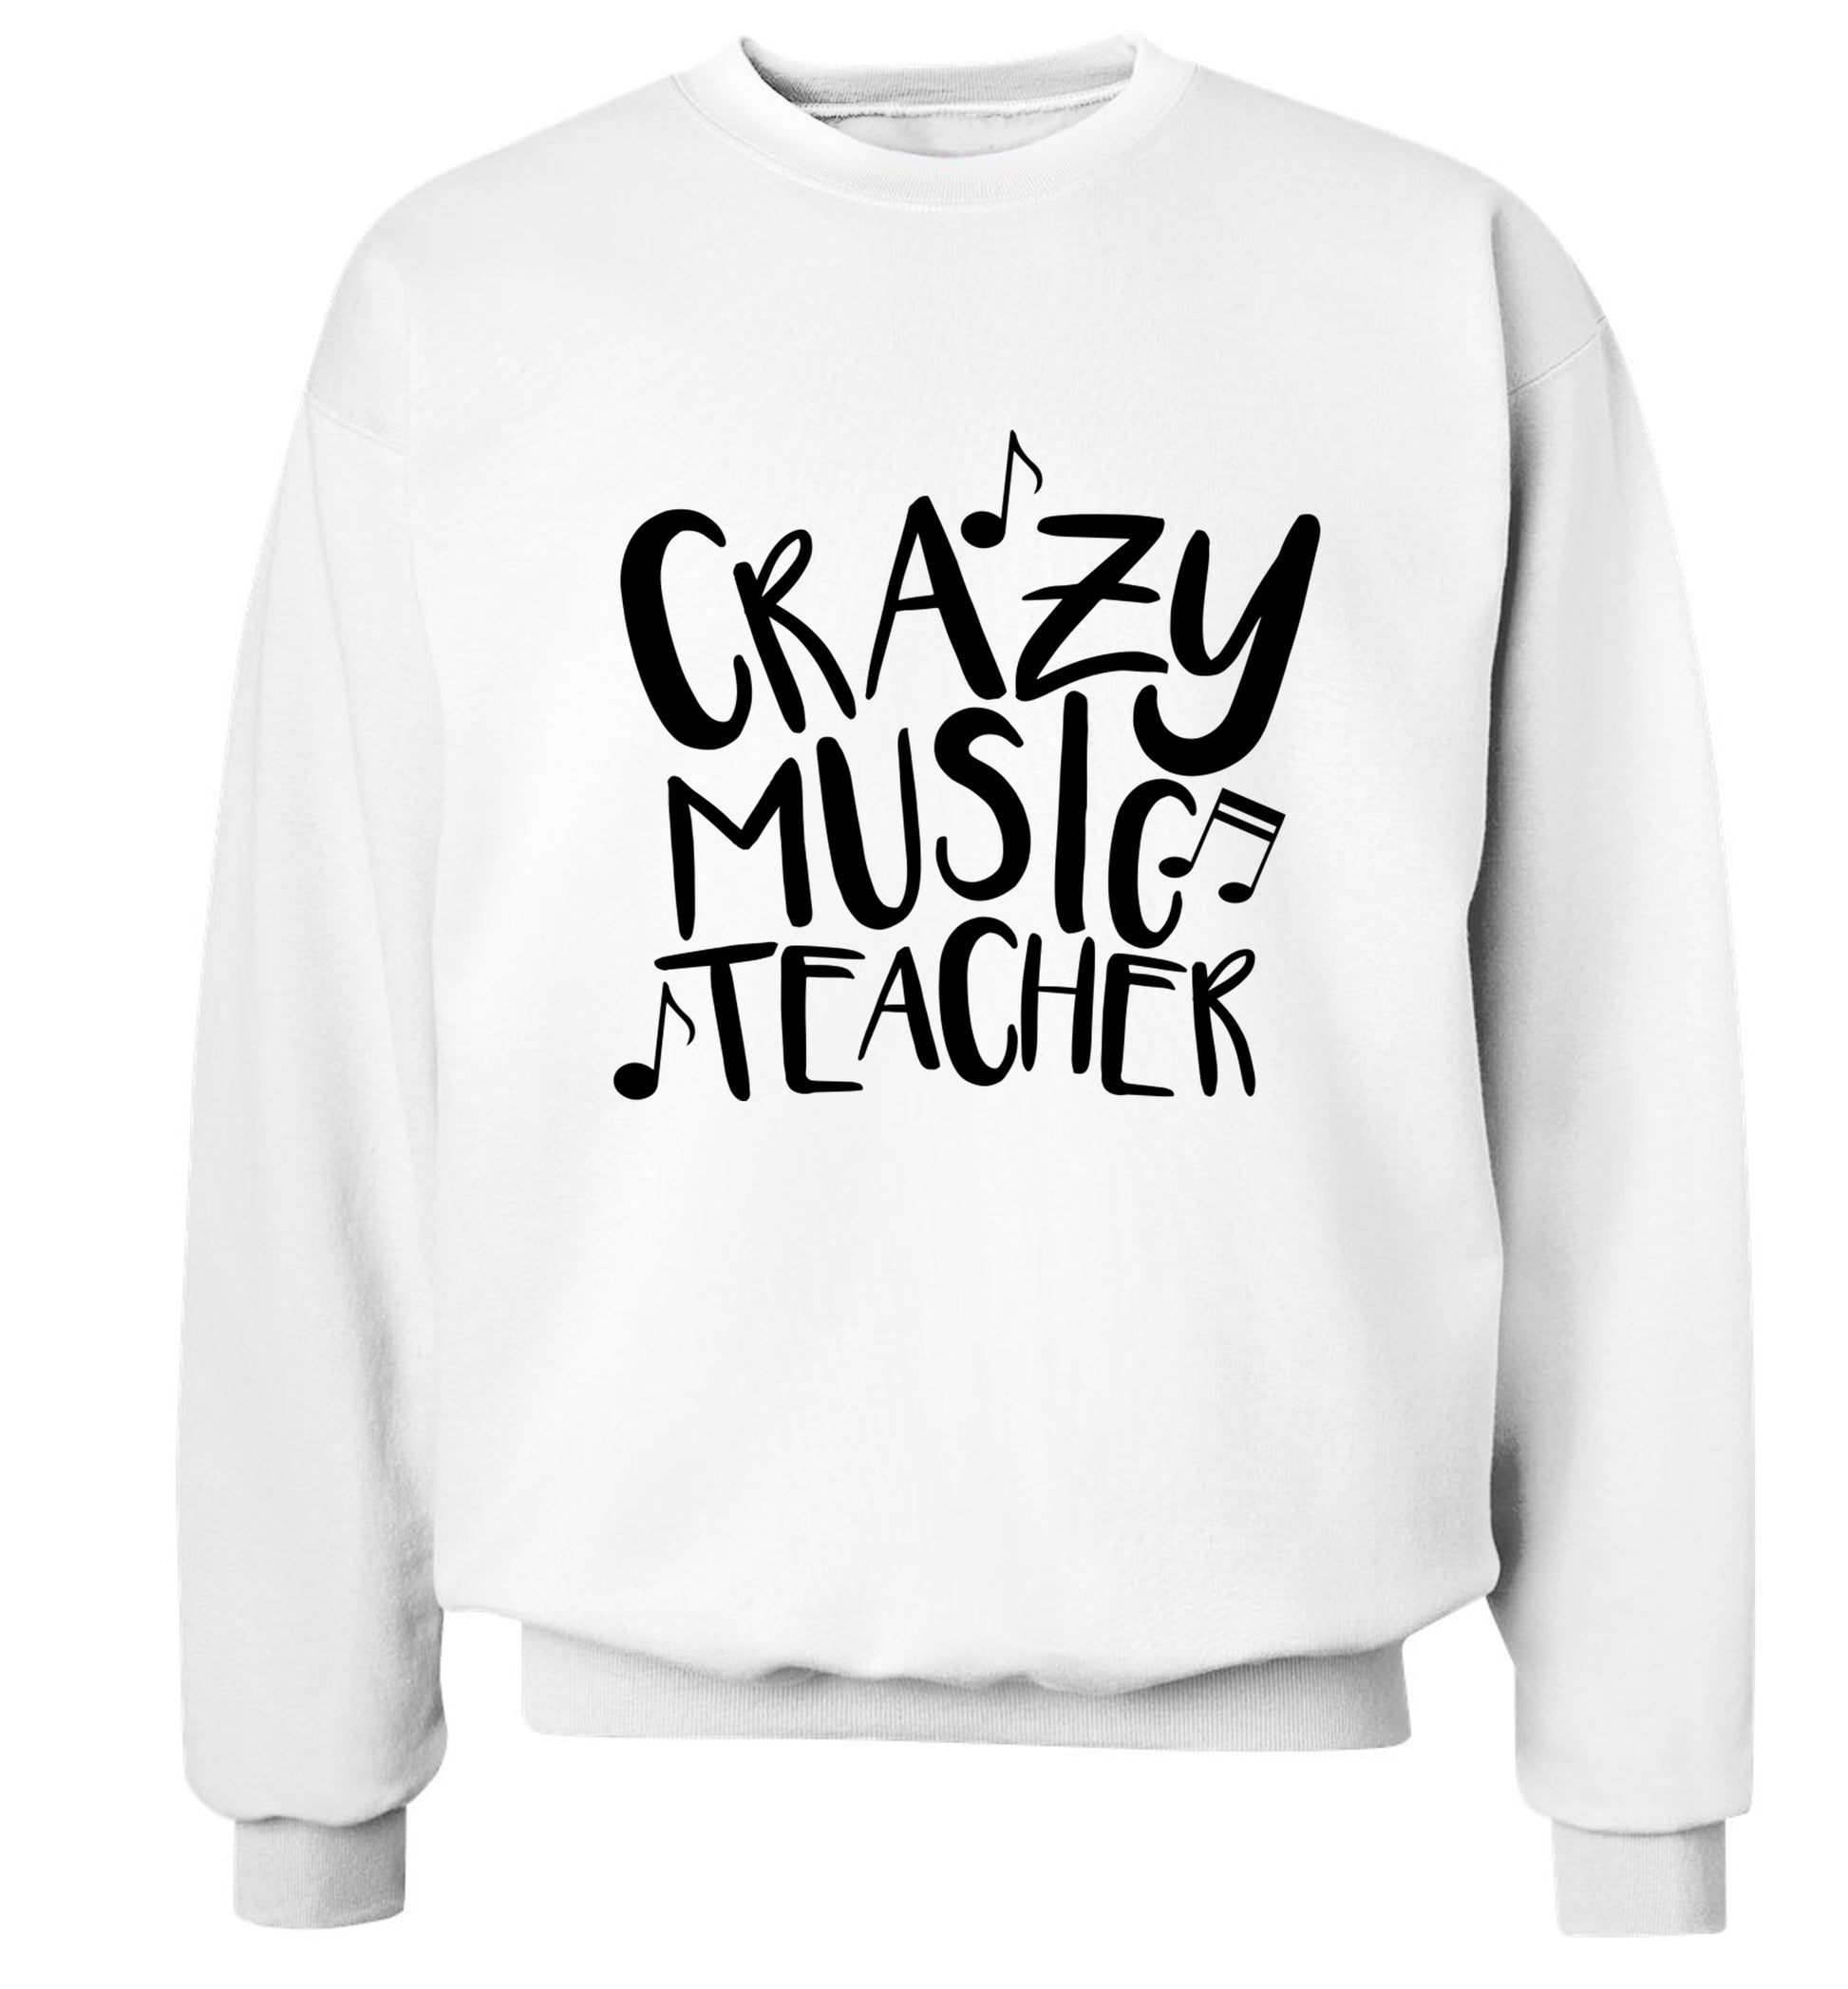 Crazy music teacher Adult's unisex white Sweater 2XL